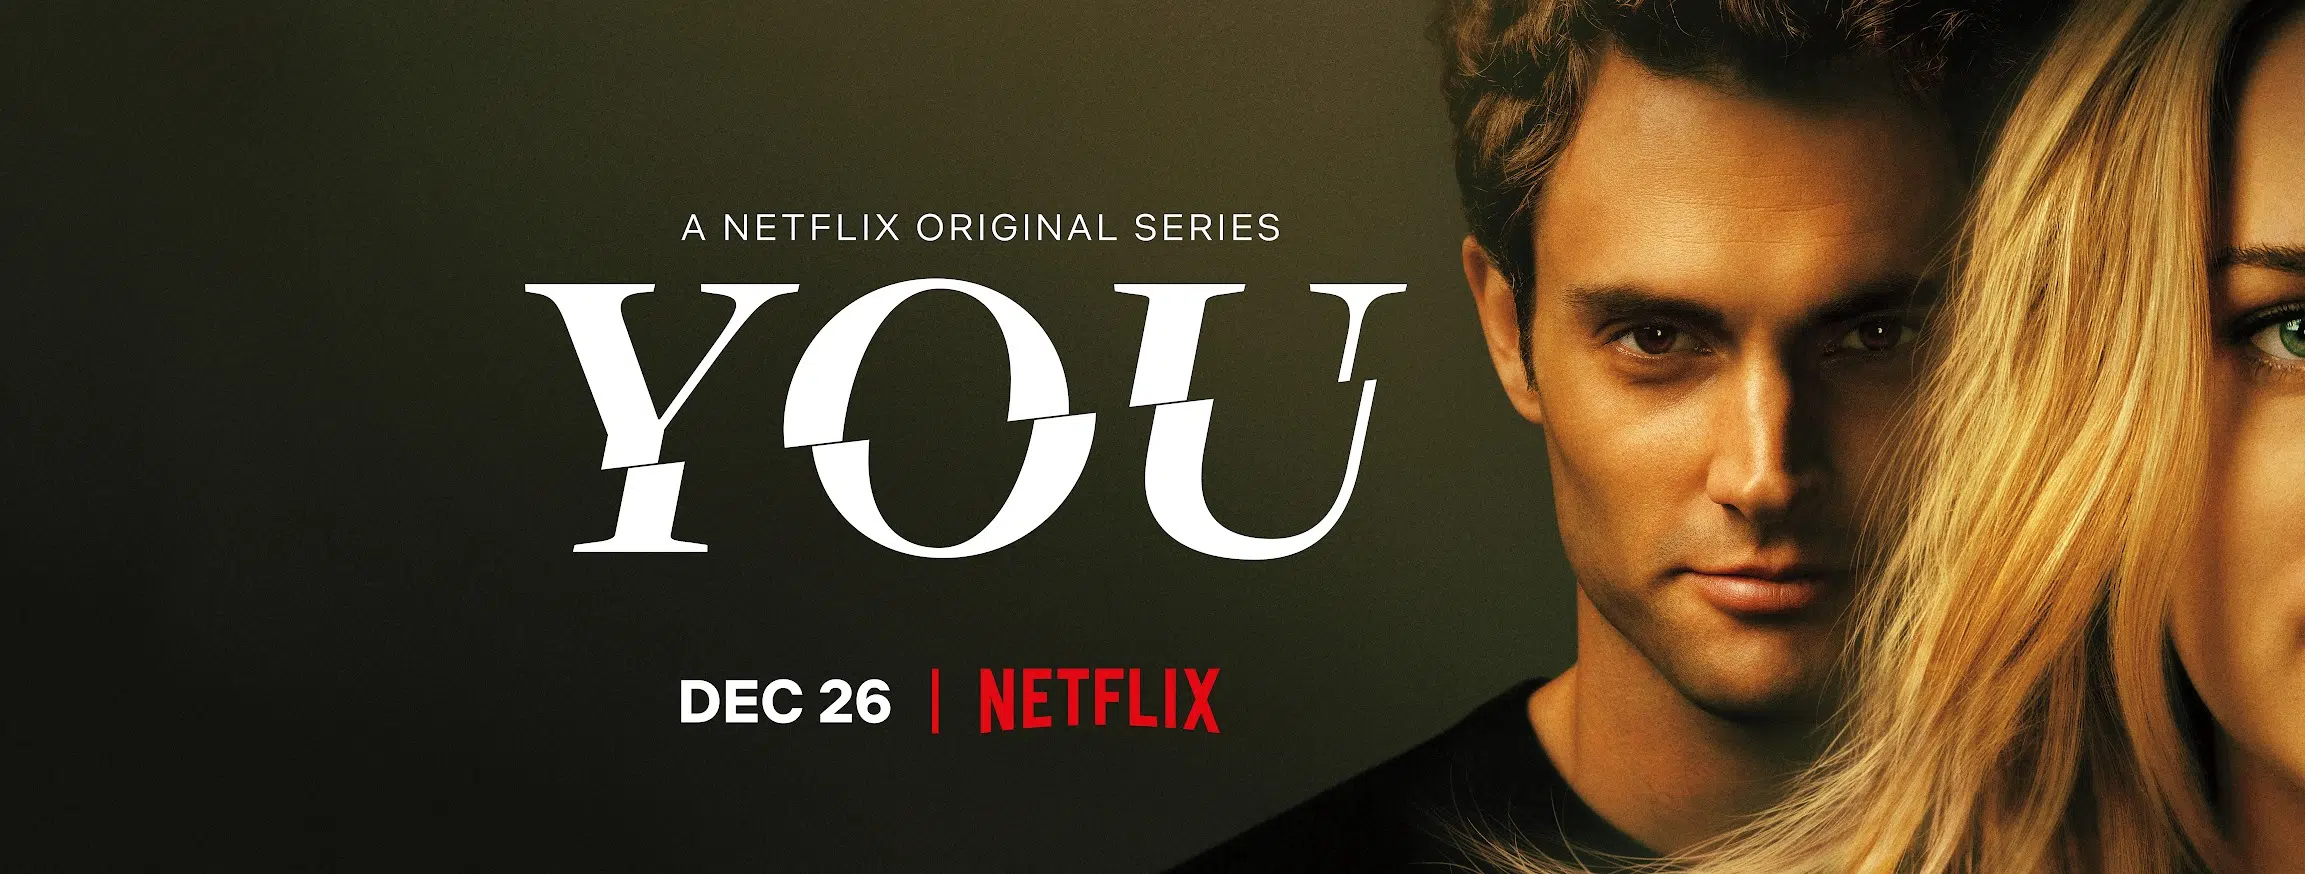 (Netflix) - "YOU" Season 2 Release Date